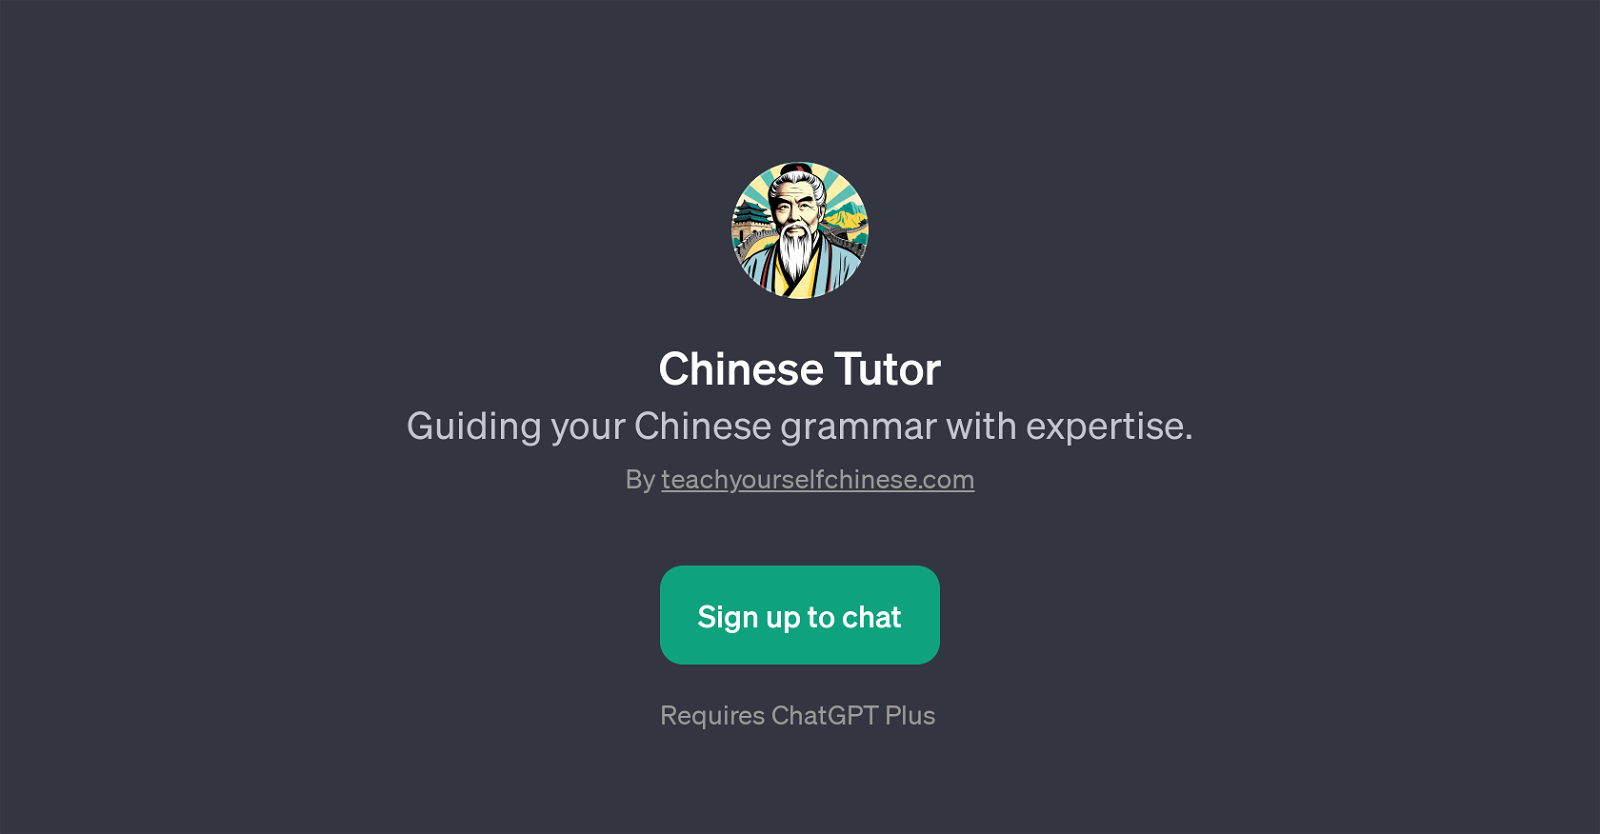 Chinese Tutor website